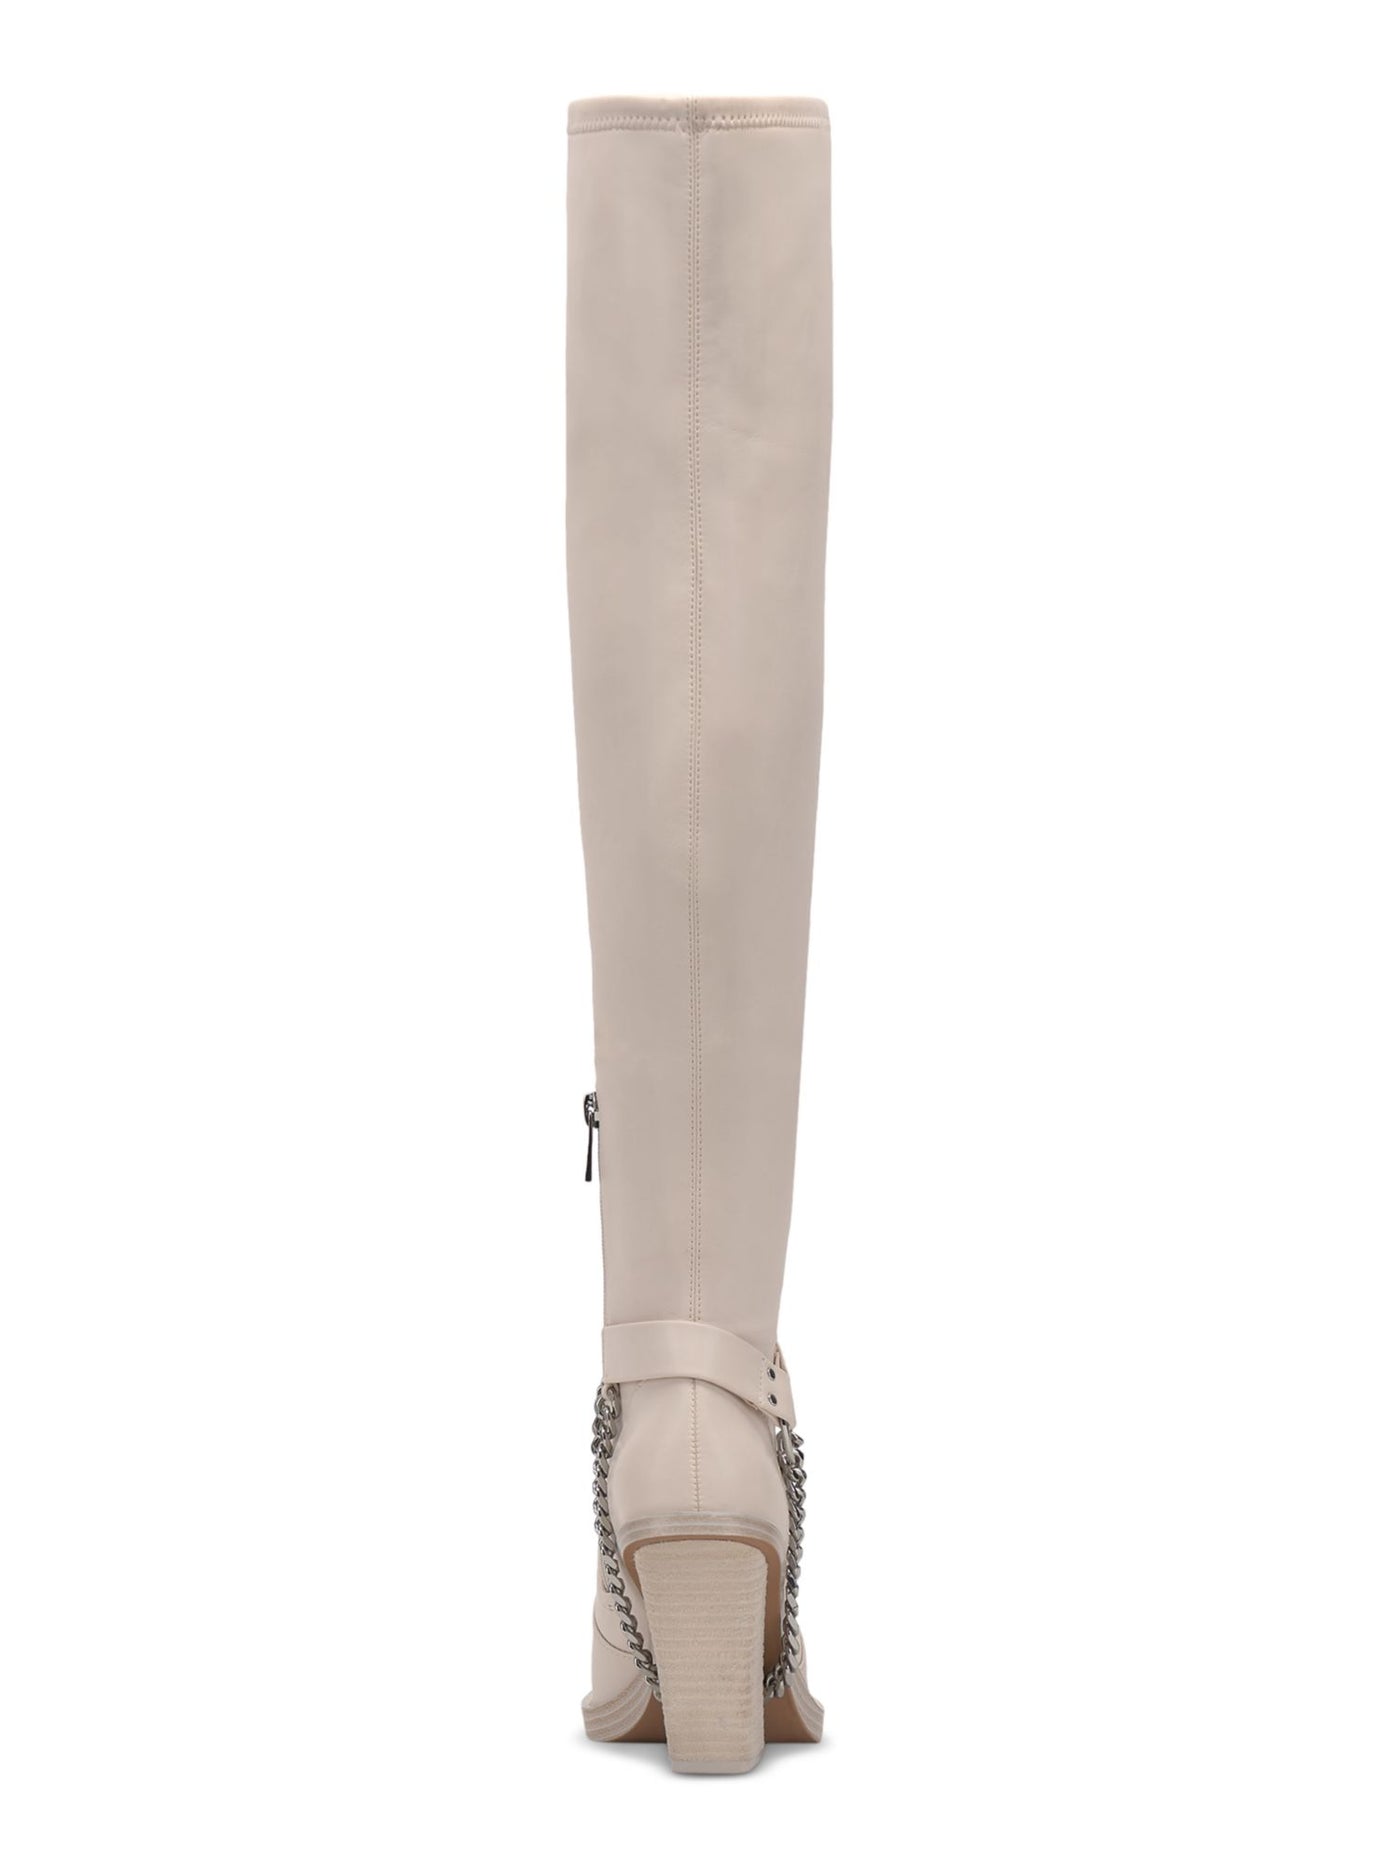 JESSICA SIMPSON Womens Ivory Comfort Langer Pointed Toe Block Heel Dress Boots 6 M